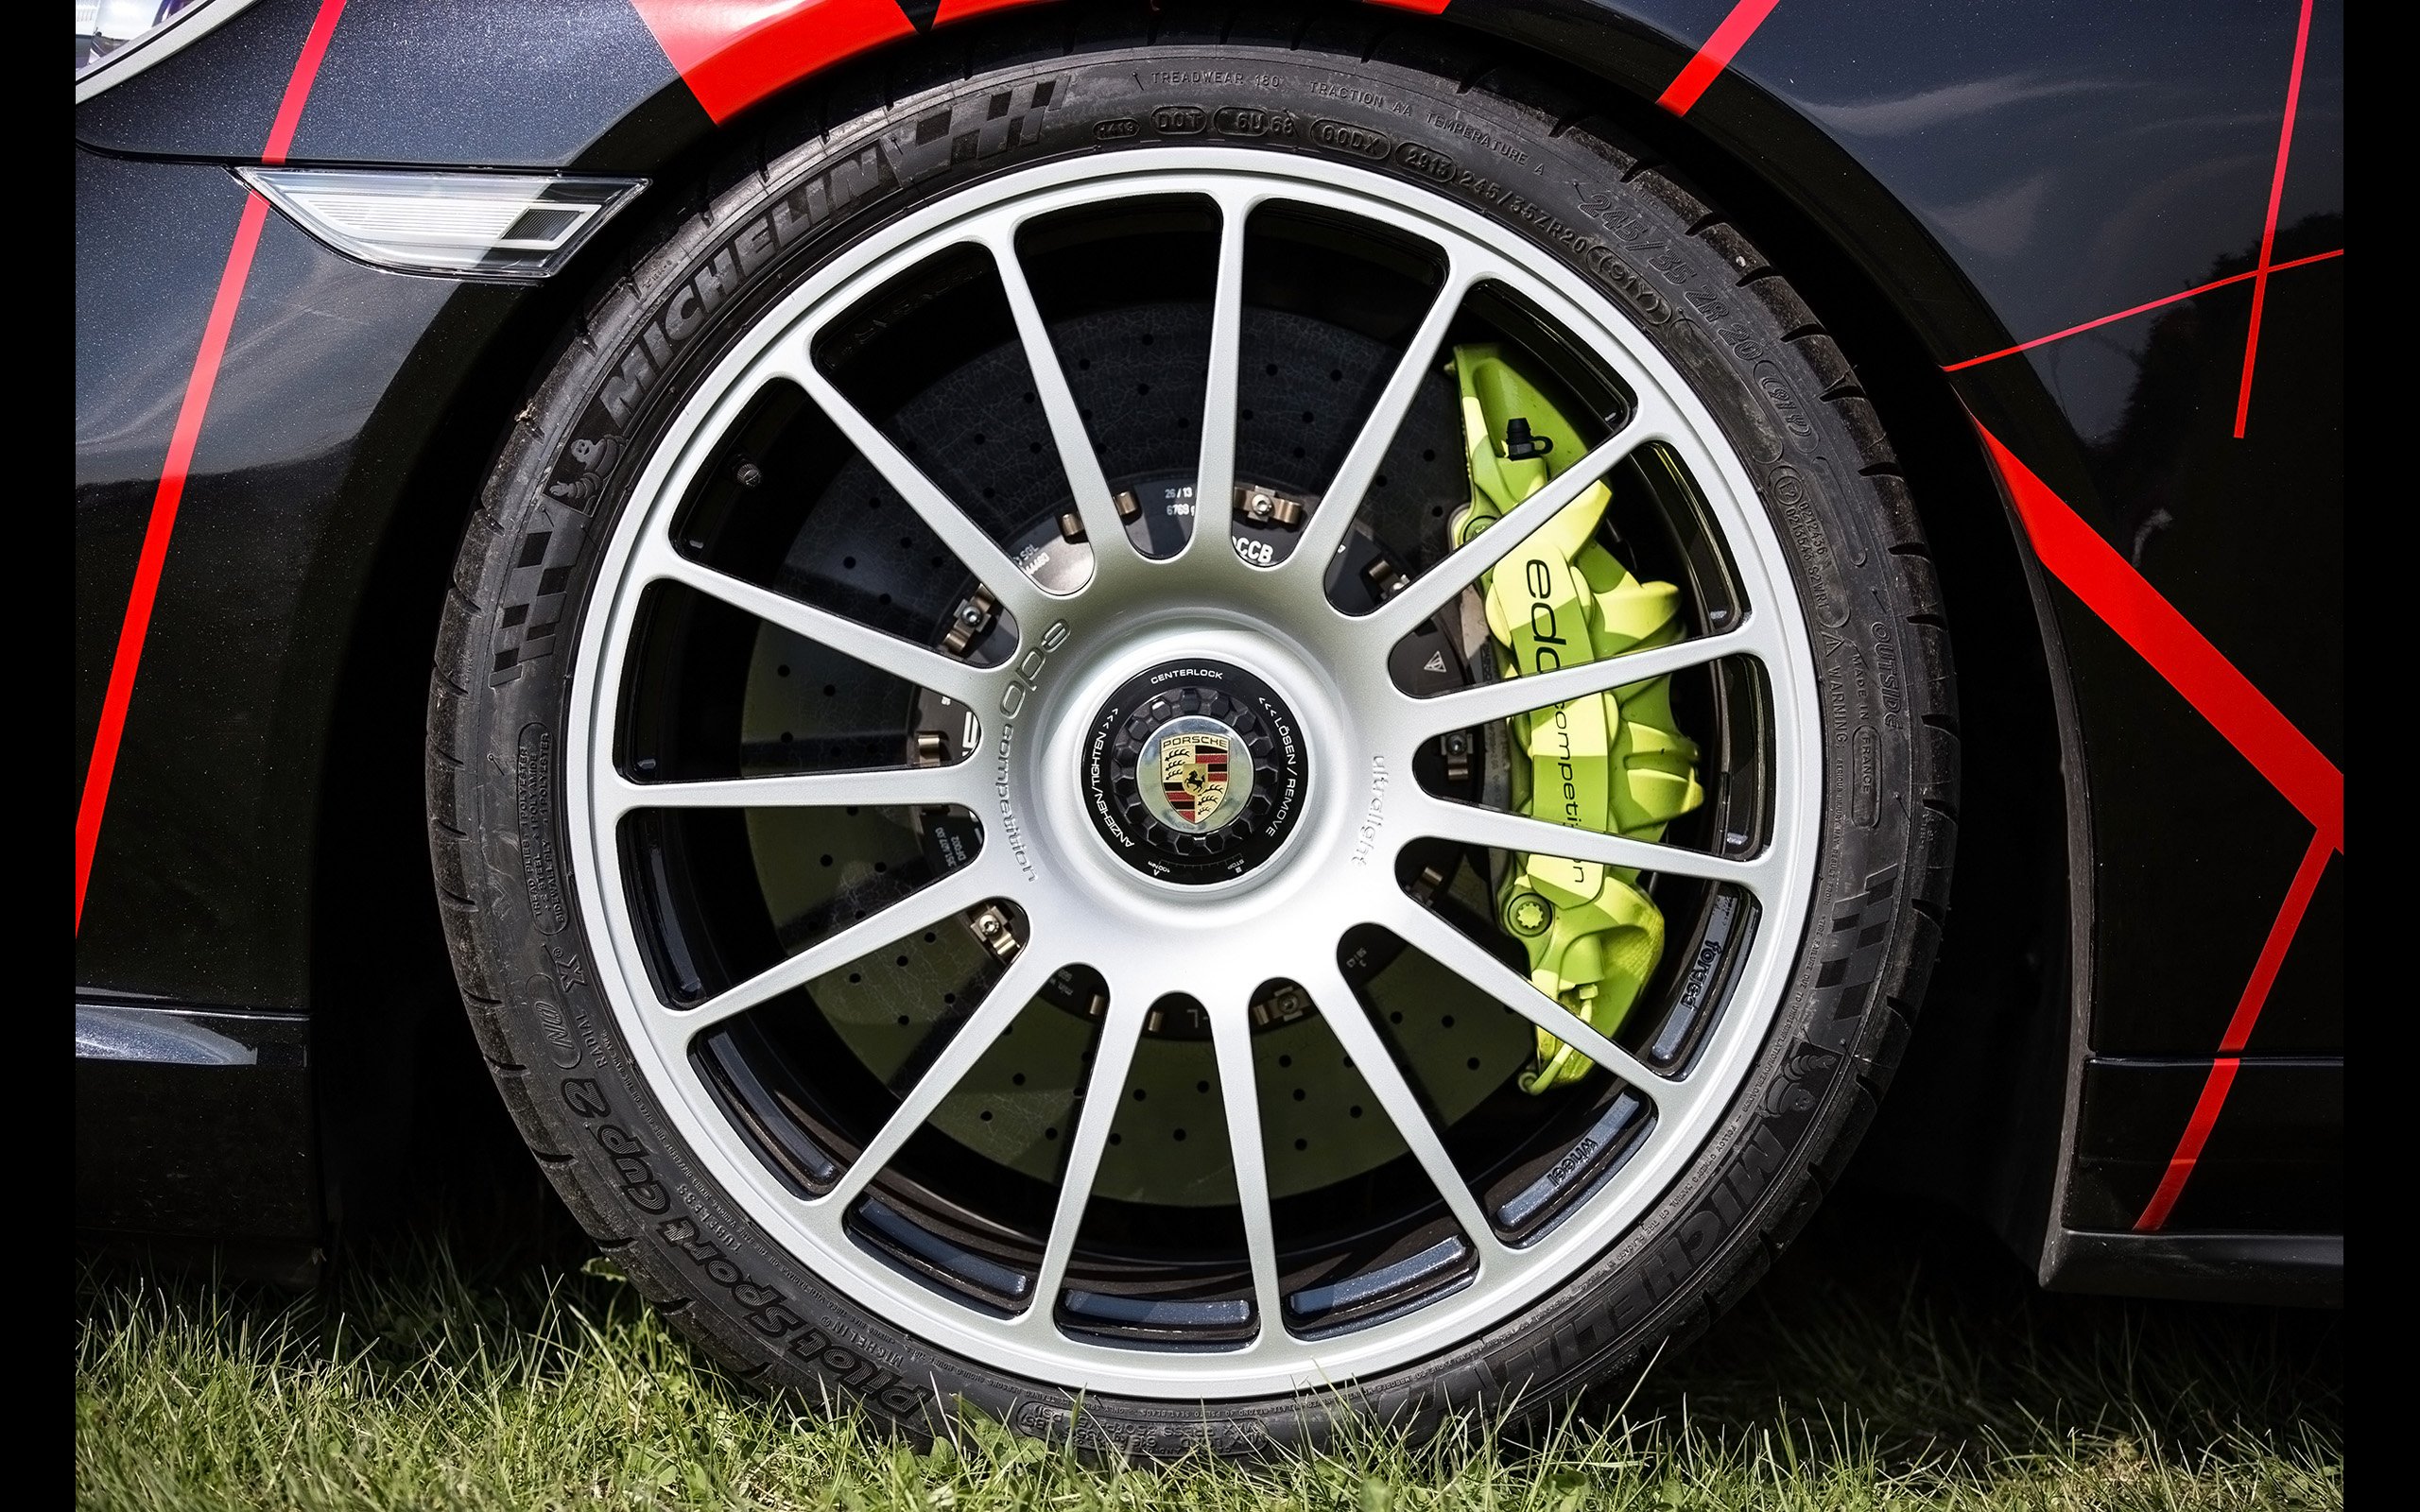 2014, Edo competition, Porsche, 991, Turbo, S, Tuning, 911, Wheel, Fw Wallpaper